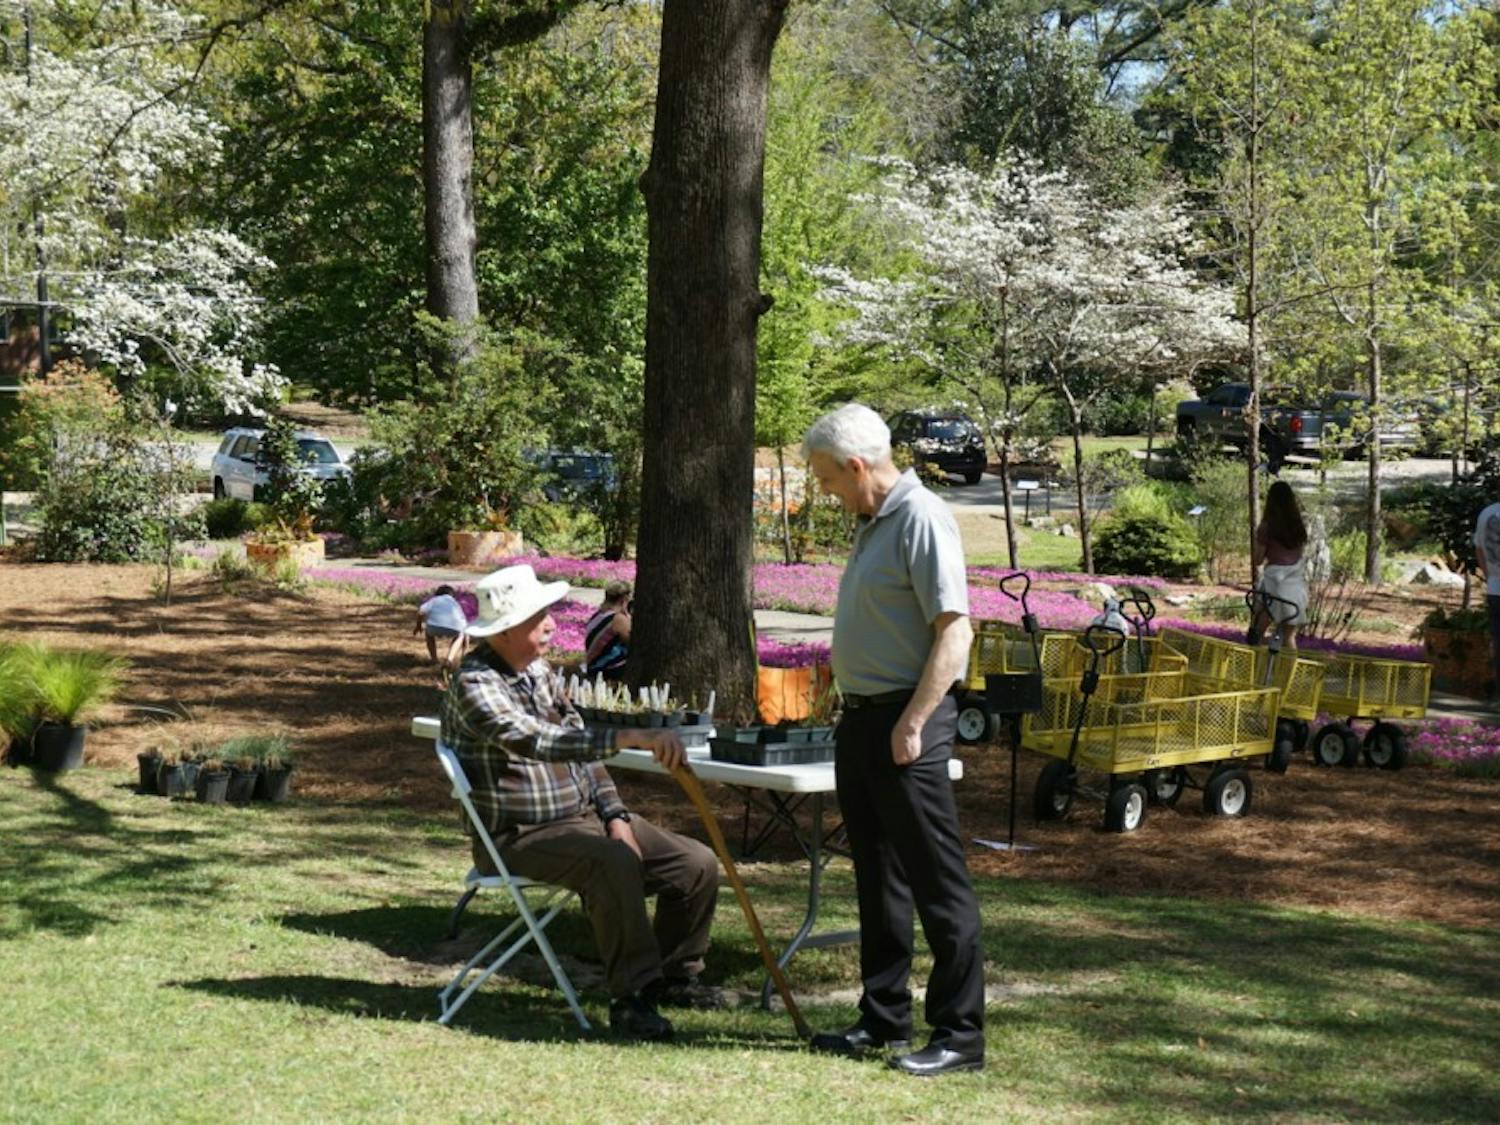 Members of the community talk during the Azalea Festival&nbsp;at Auburn University's Donald E. Davis Arboretum on Saturday, March 31, 2018, in Auburn, Ala.